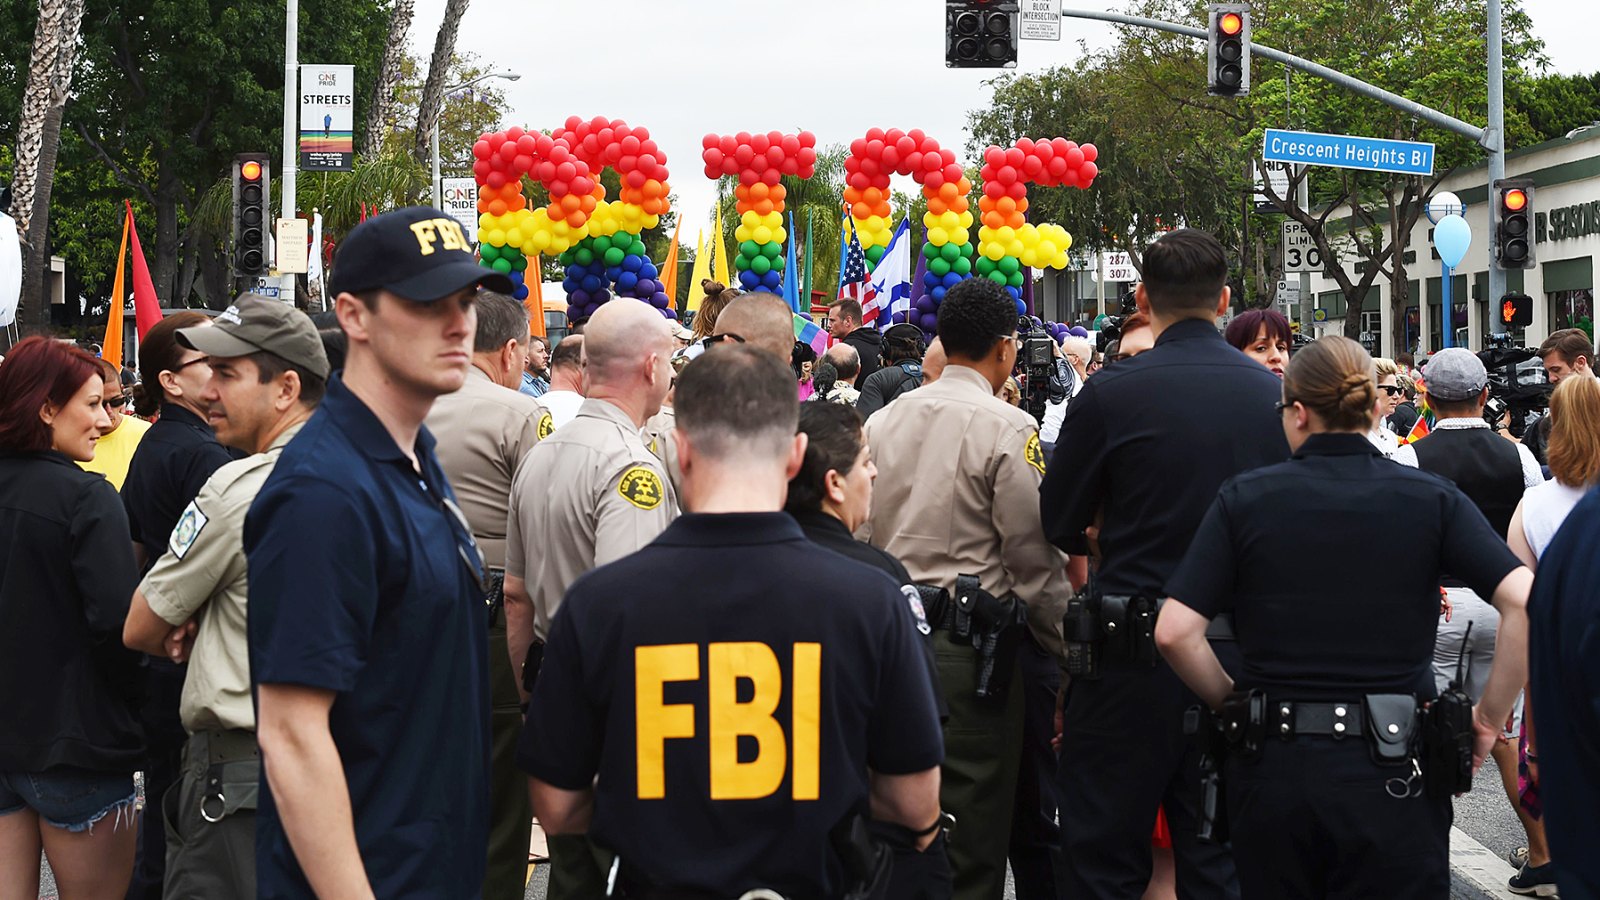 security at Pride after Orlando massacre